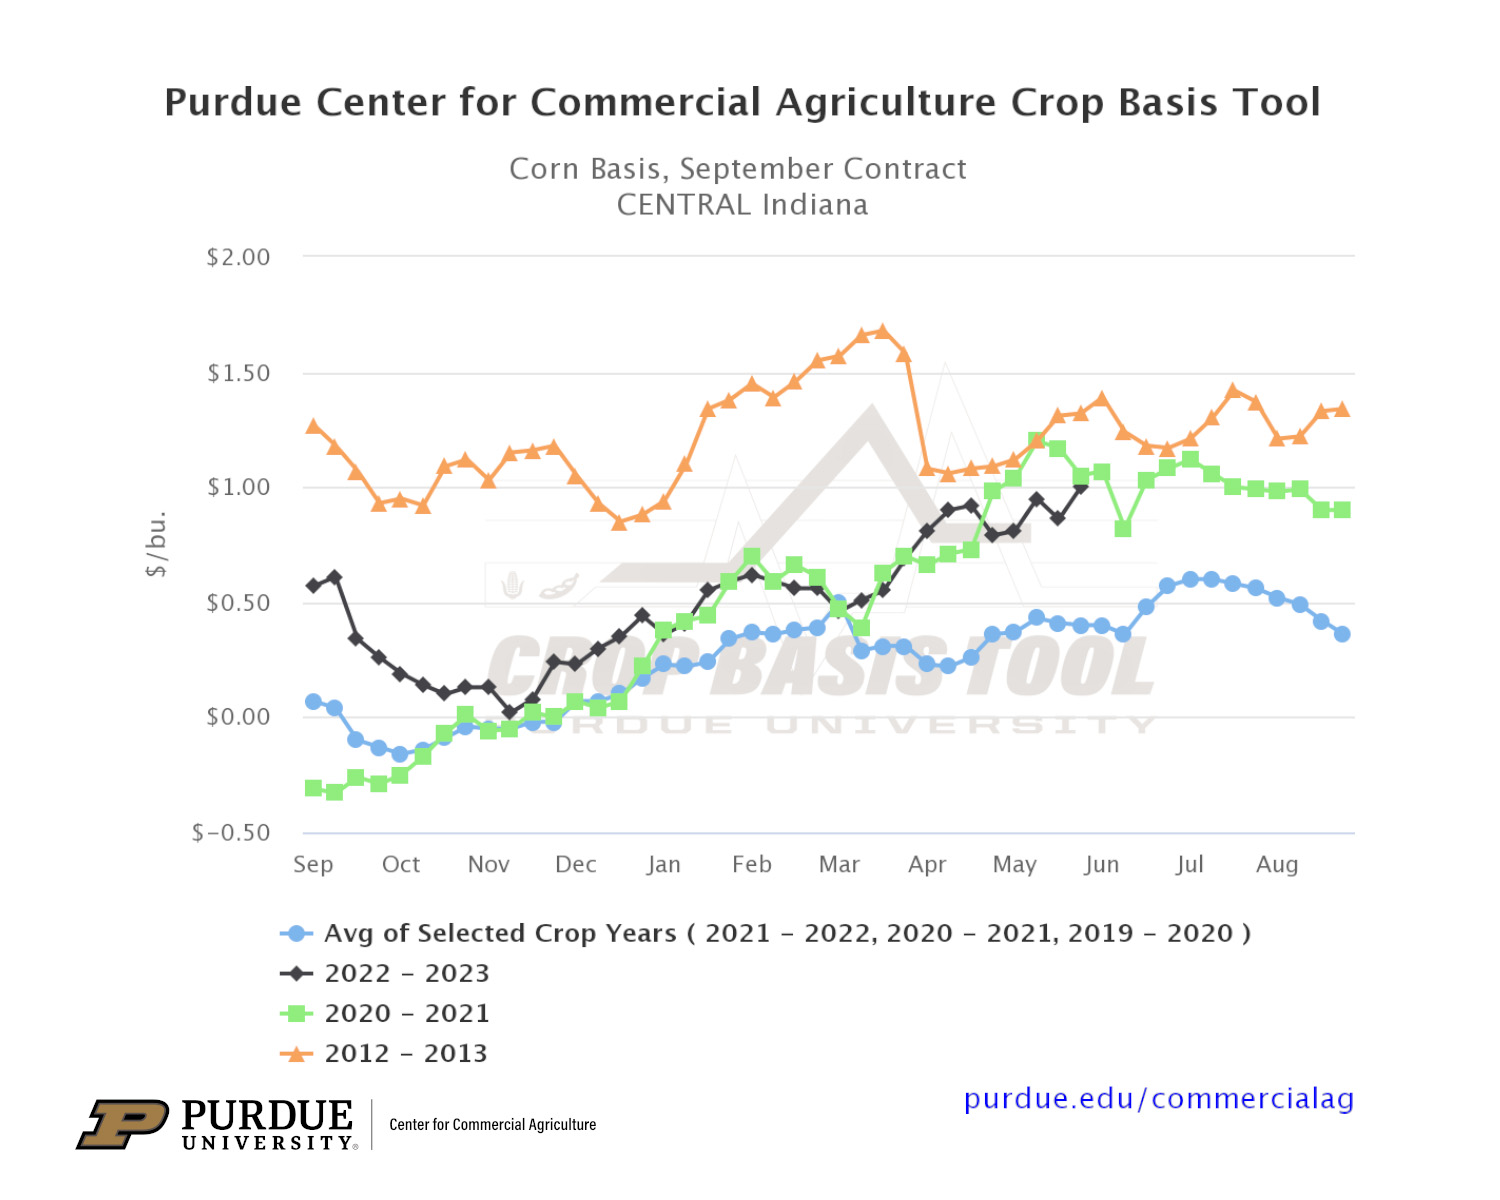 Corn Basis, September Contract, Central Indiana, Purdue Crop Basis Tool